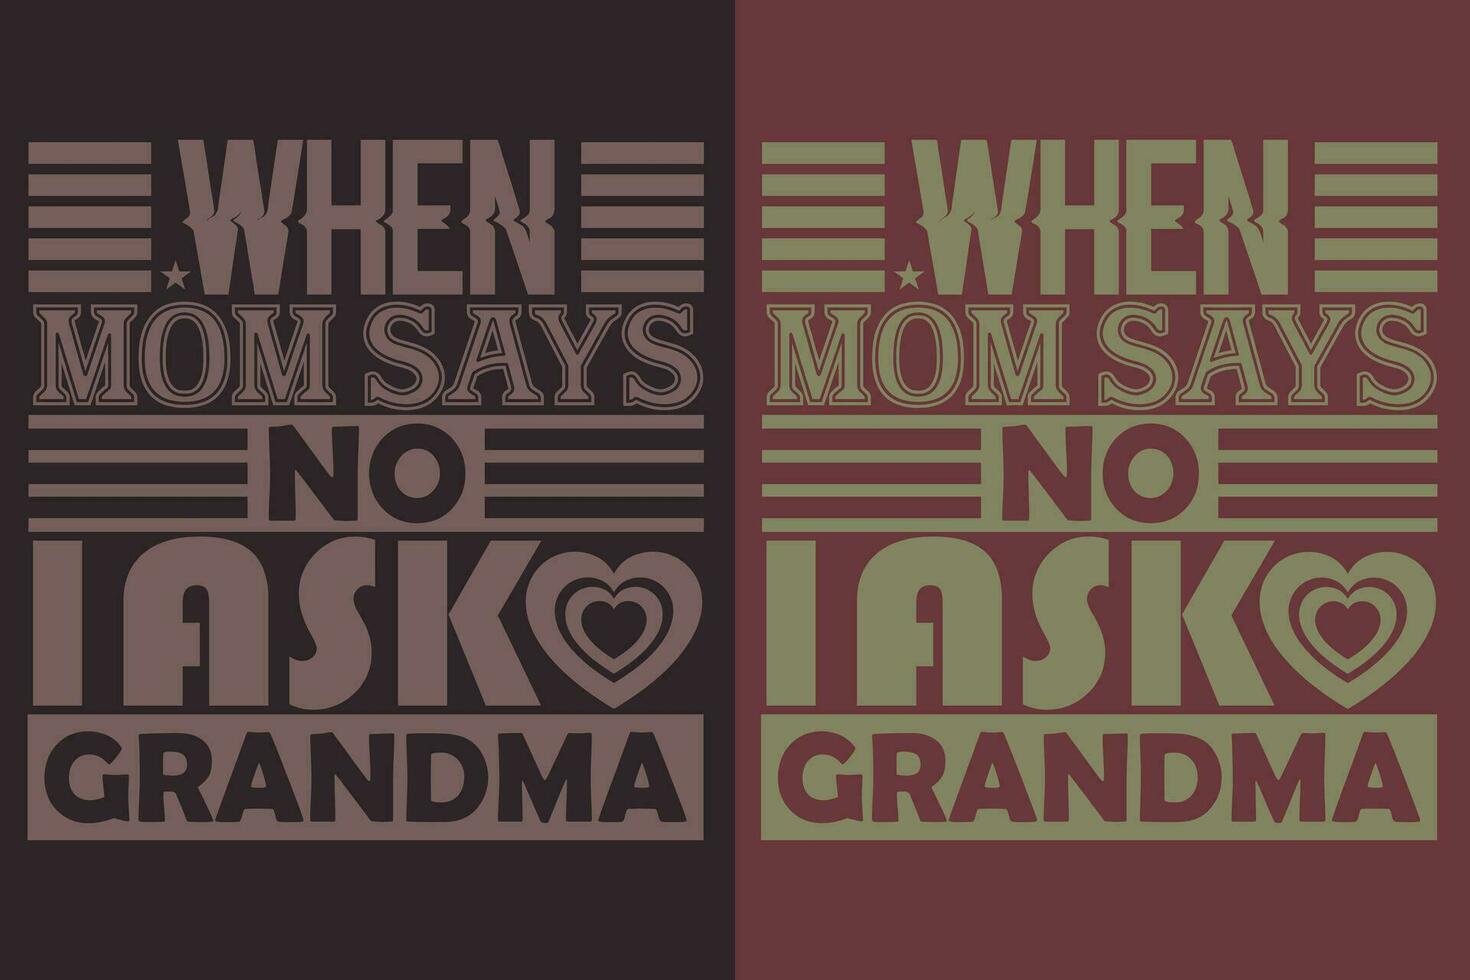 When Mom Says No I Ask Grandma, Grandpa Shirt, Gift For Grandma, Best Grandma, Grandma Heart Shirt, Custom Grandma, Promoted To Grandma, New Grandma Shirt, Blessed Mama vector